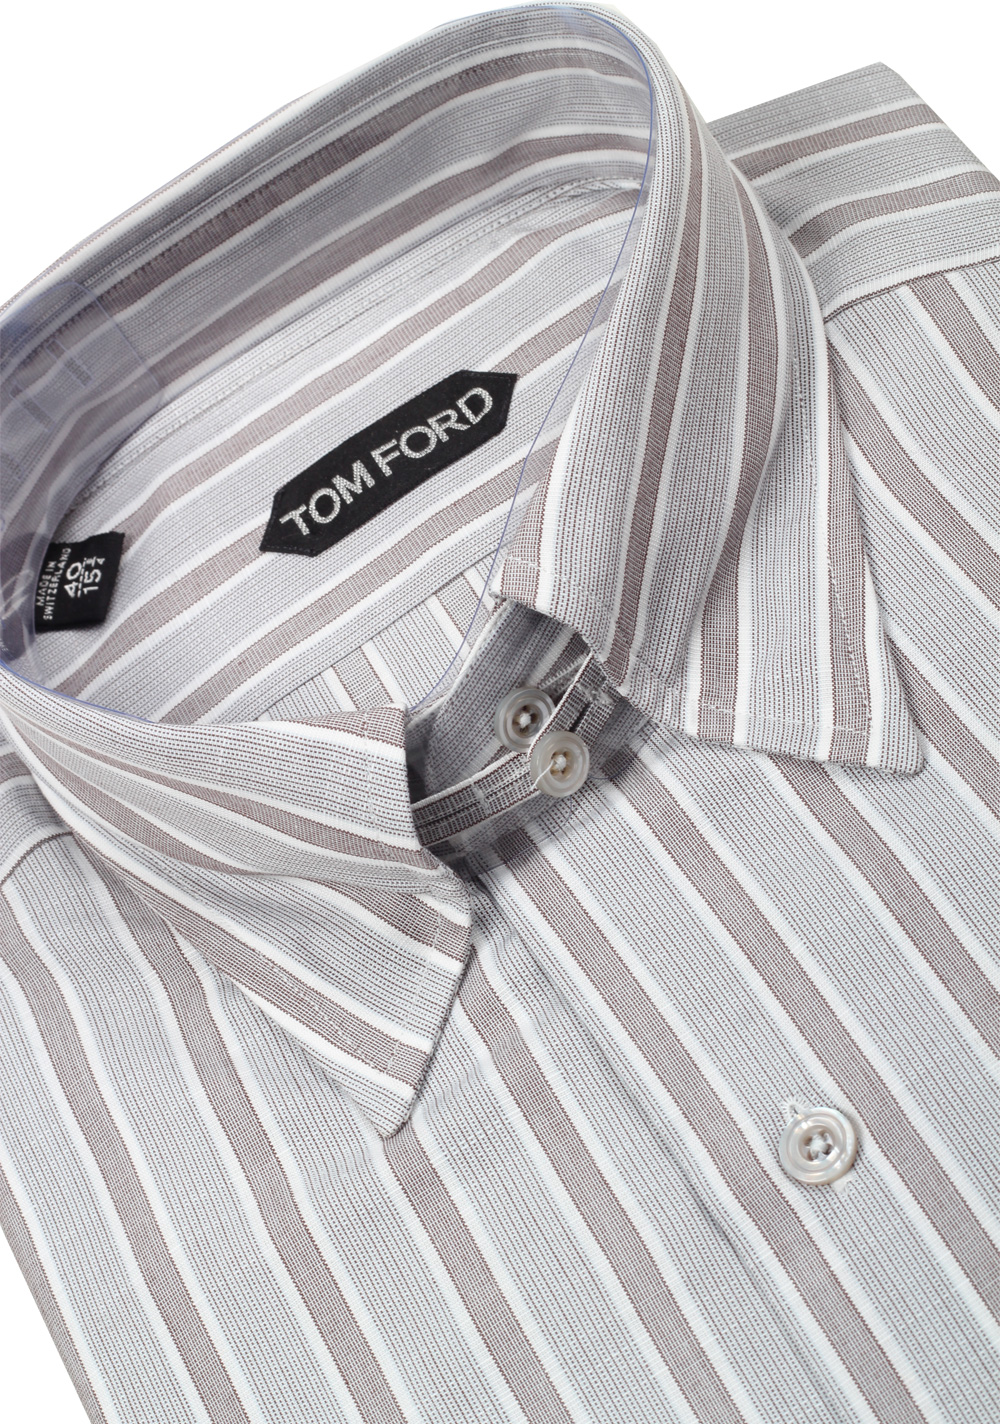 TOM FORD Striped Gray High Collar Dress Shirt Size 40 / 15,75 U.S ...